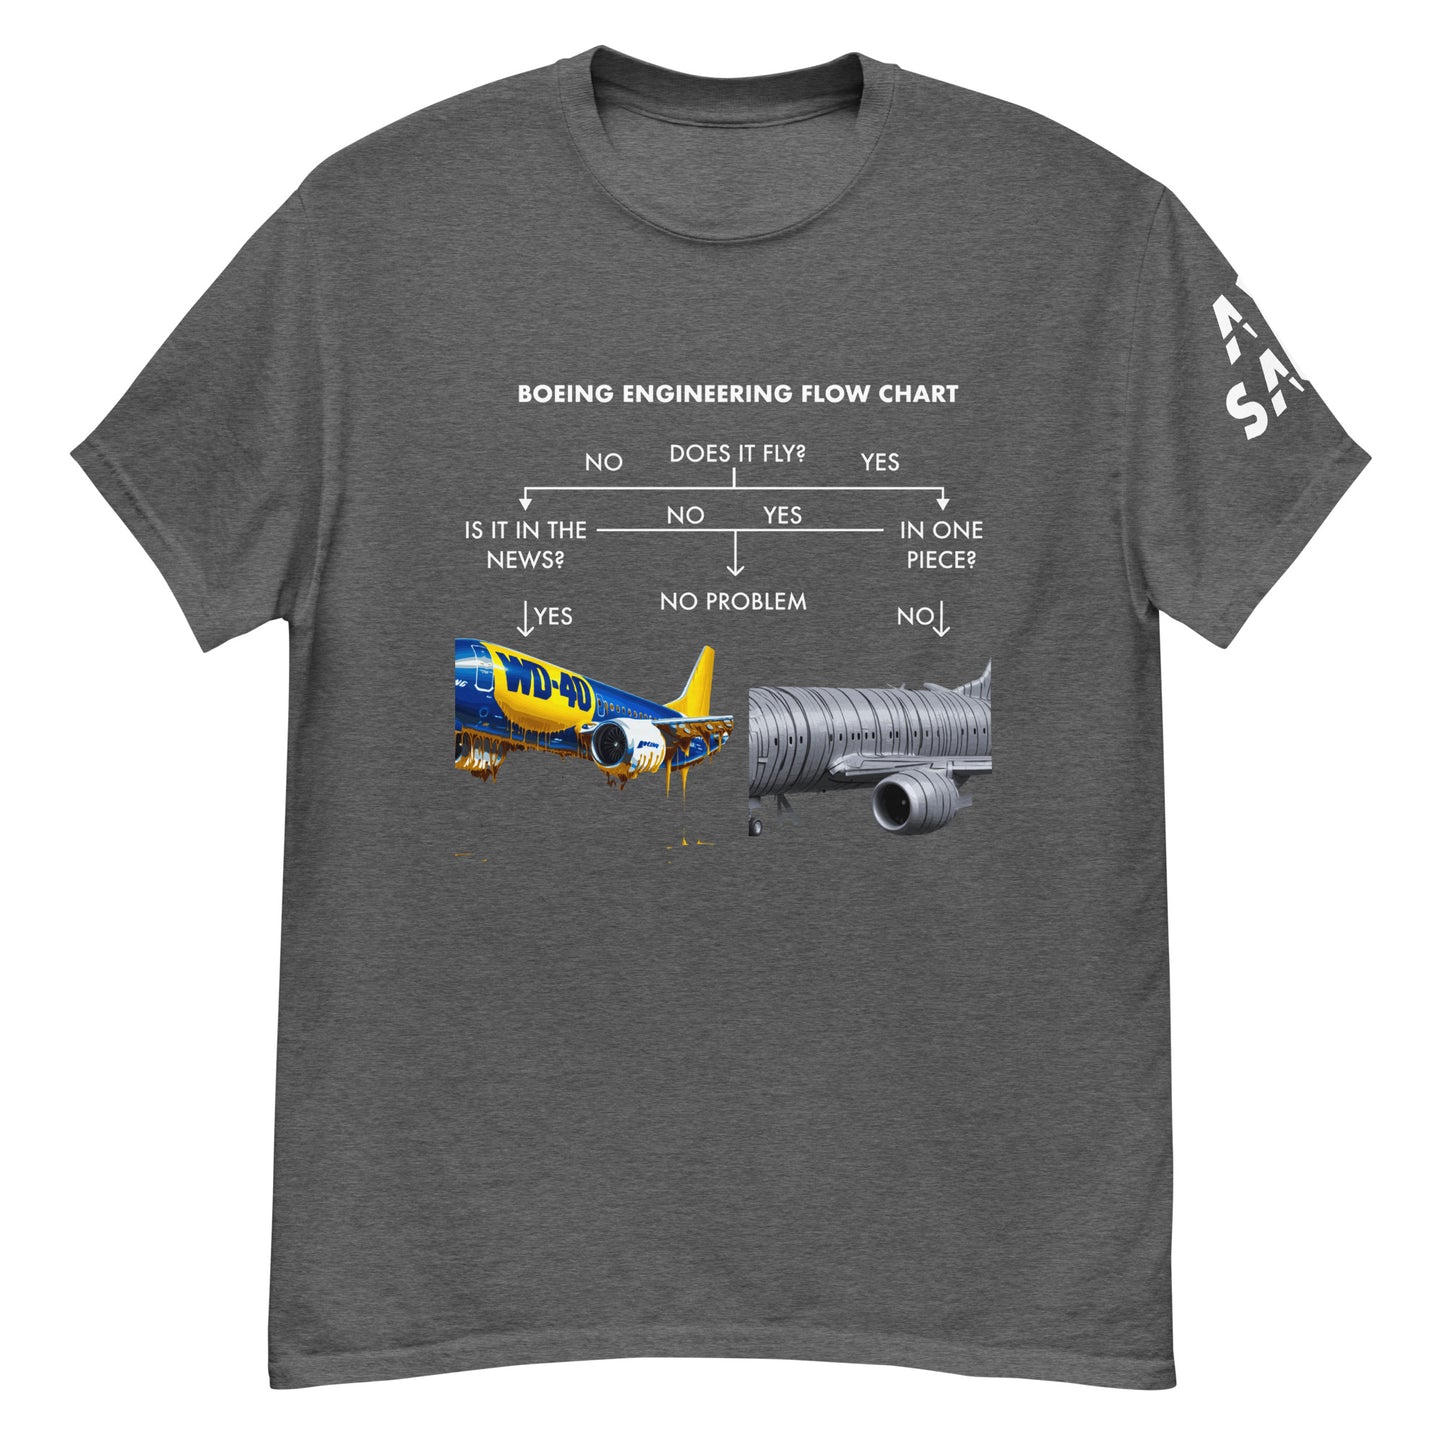 Boeing Engineering Flowchart T-Shirt